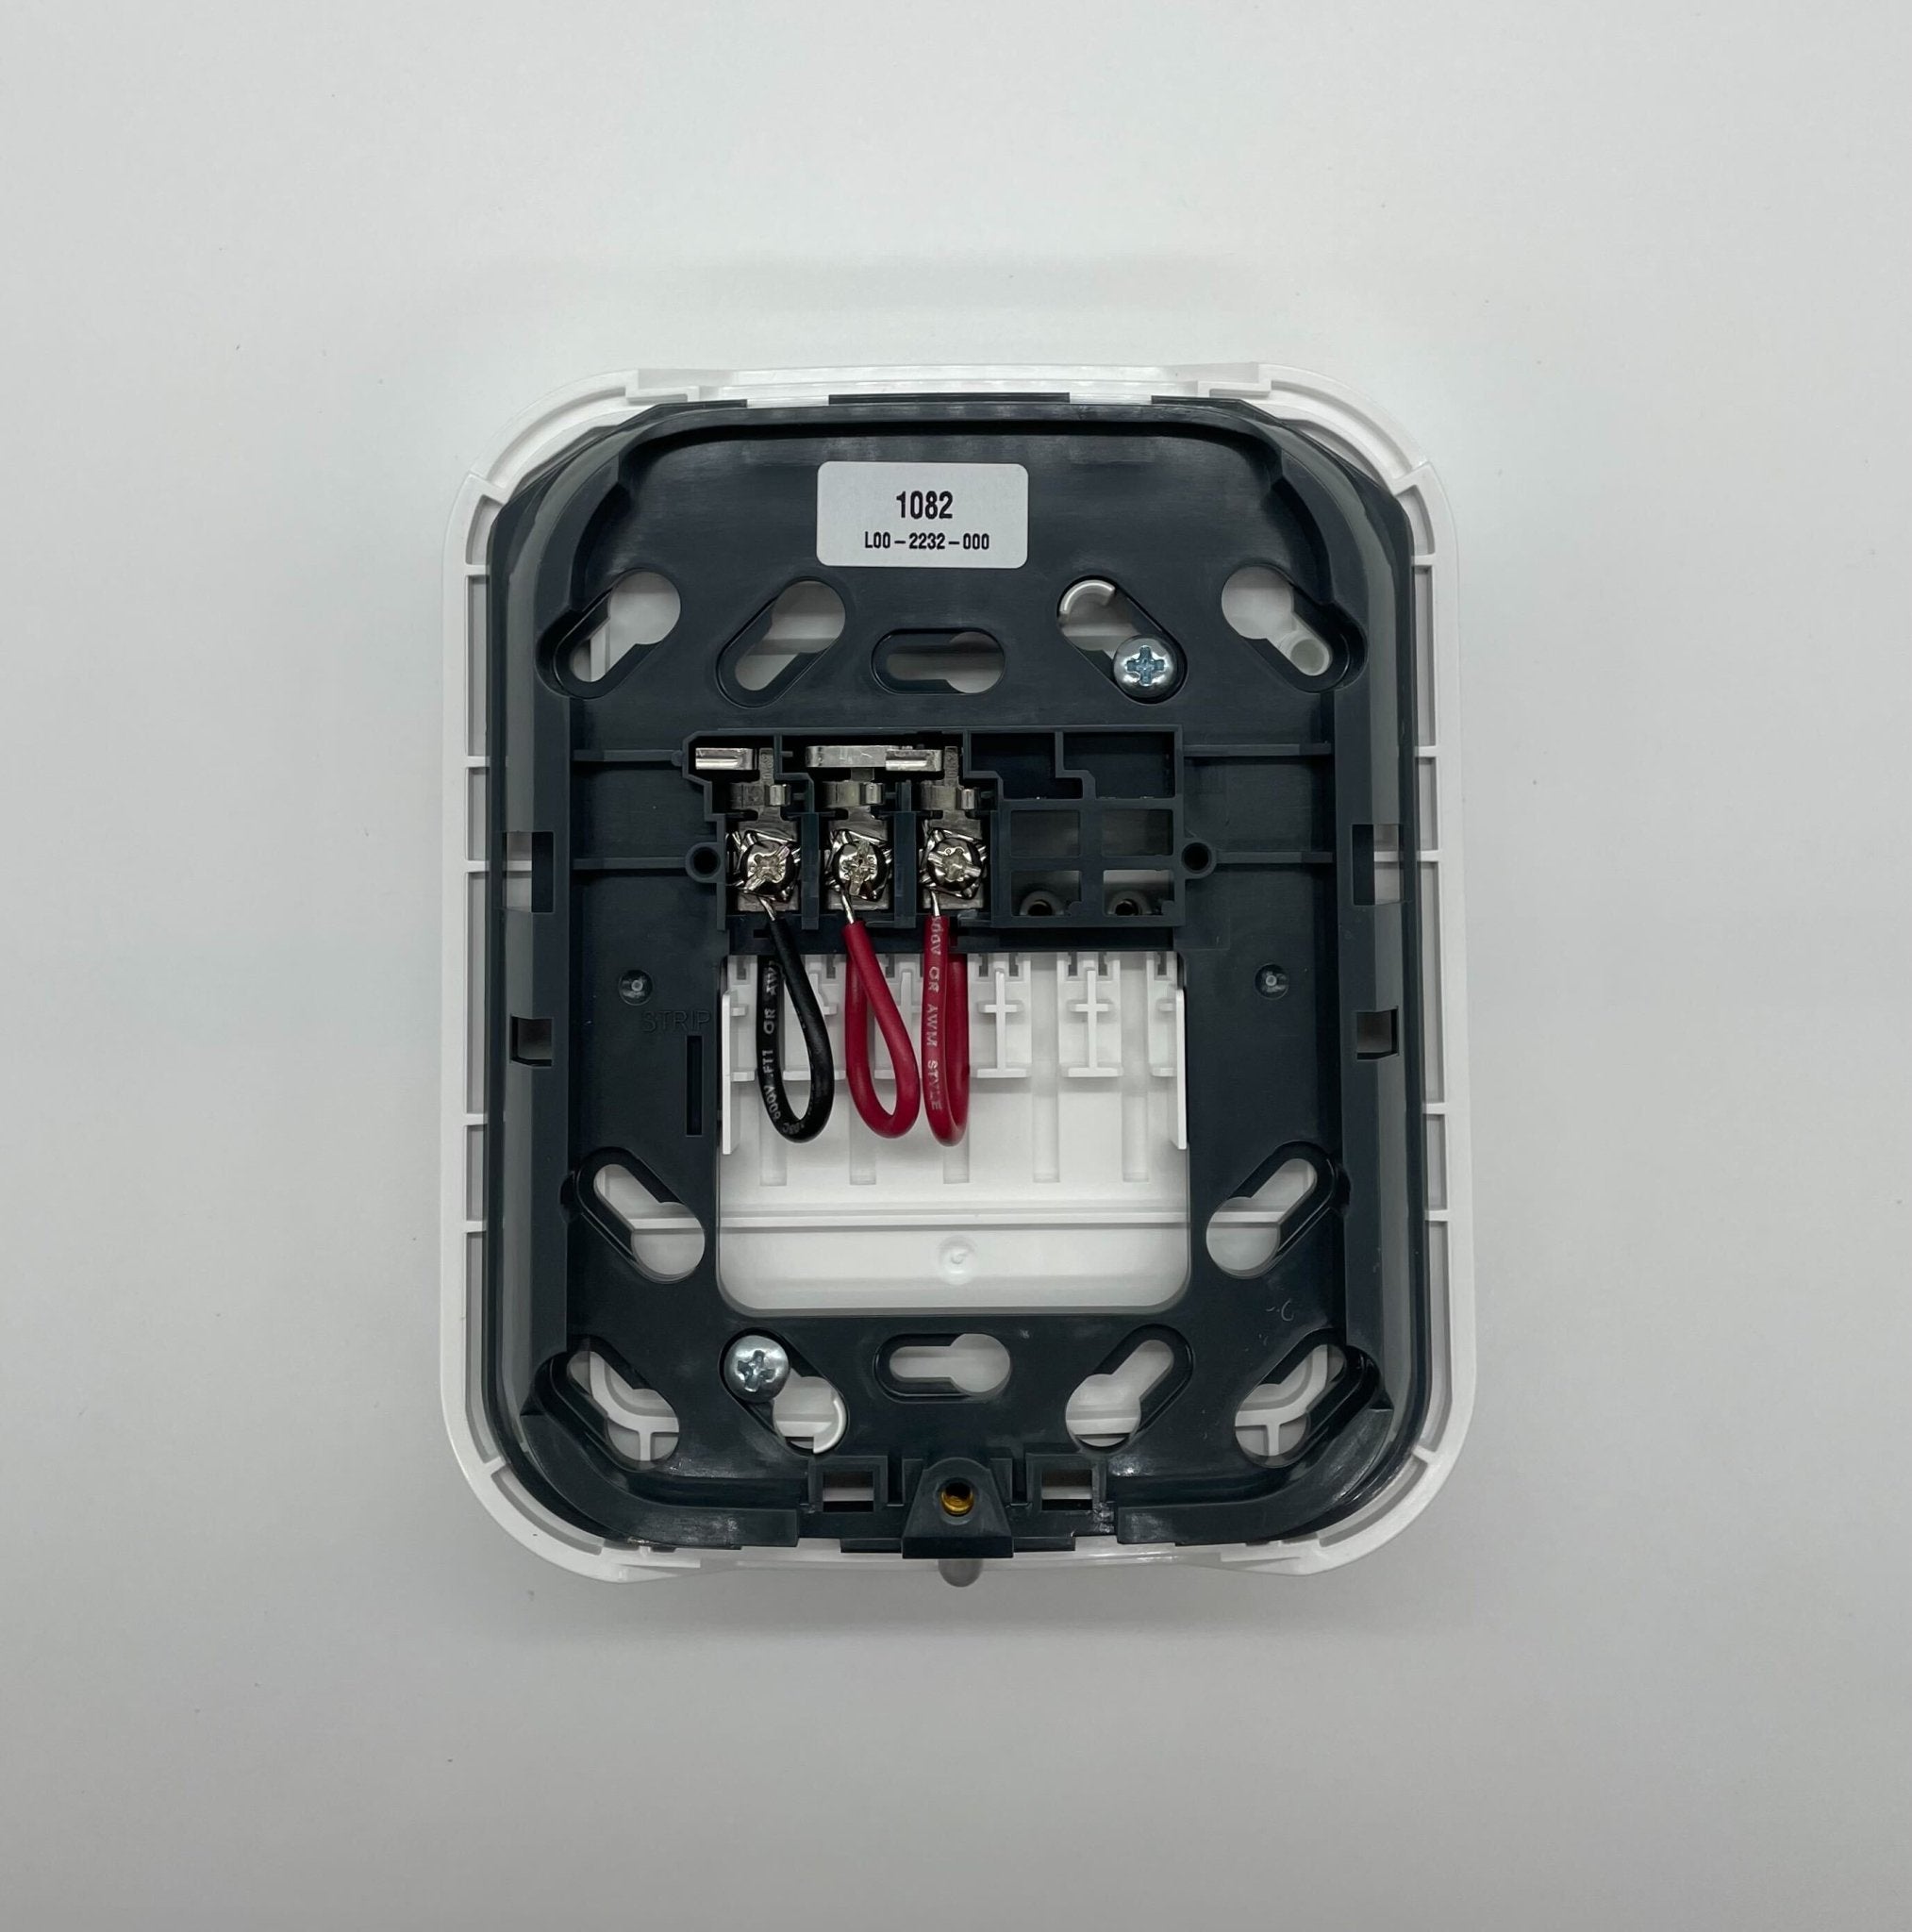 System Sensor WAV-WL Wireless Av Base - The Fire Alarm Supplier